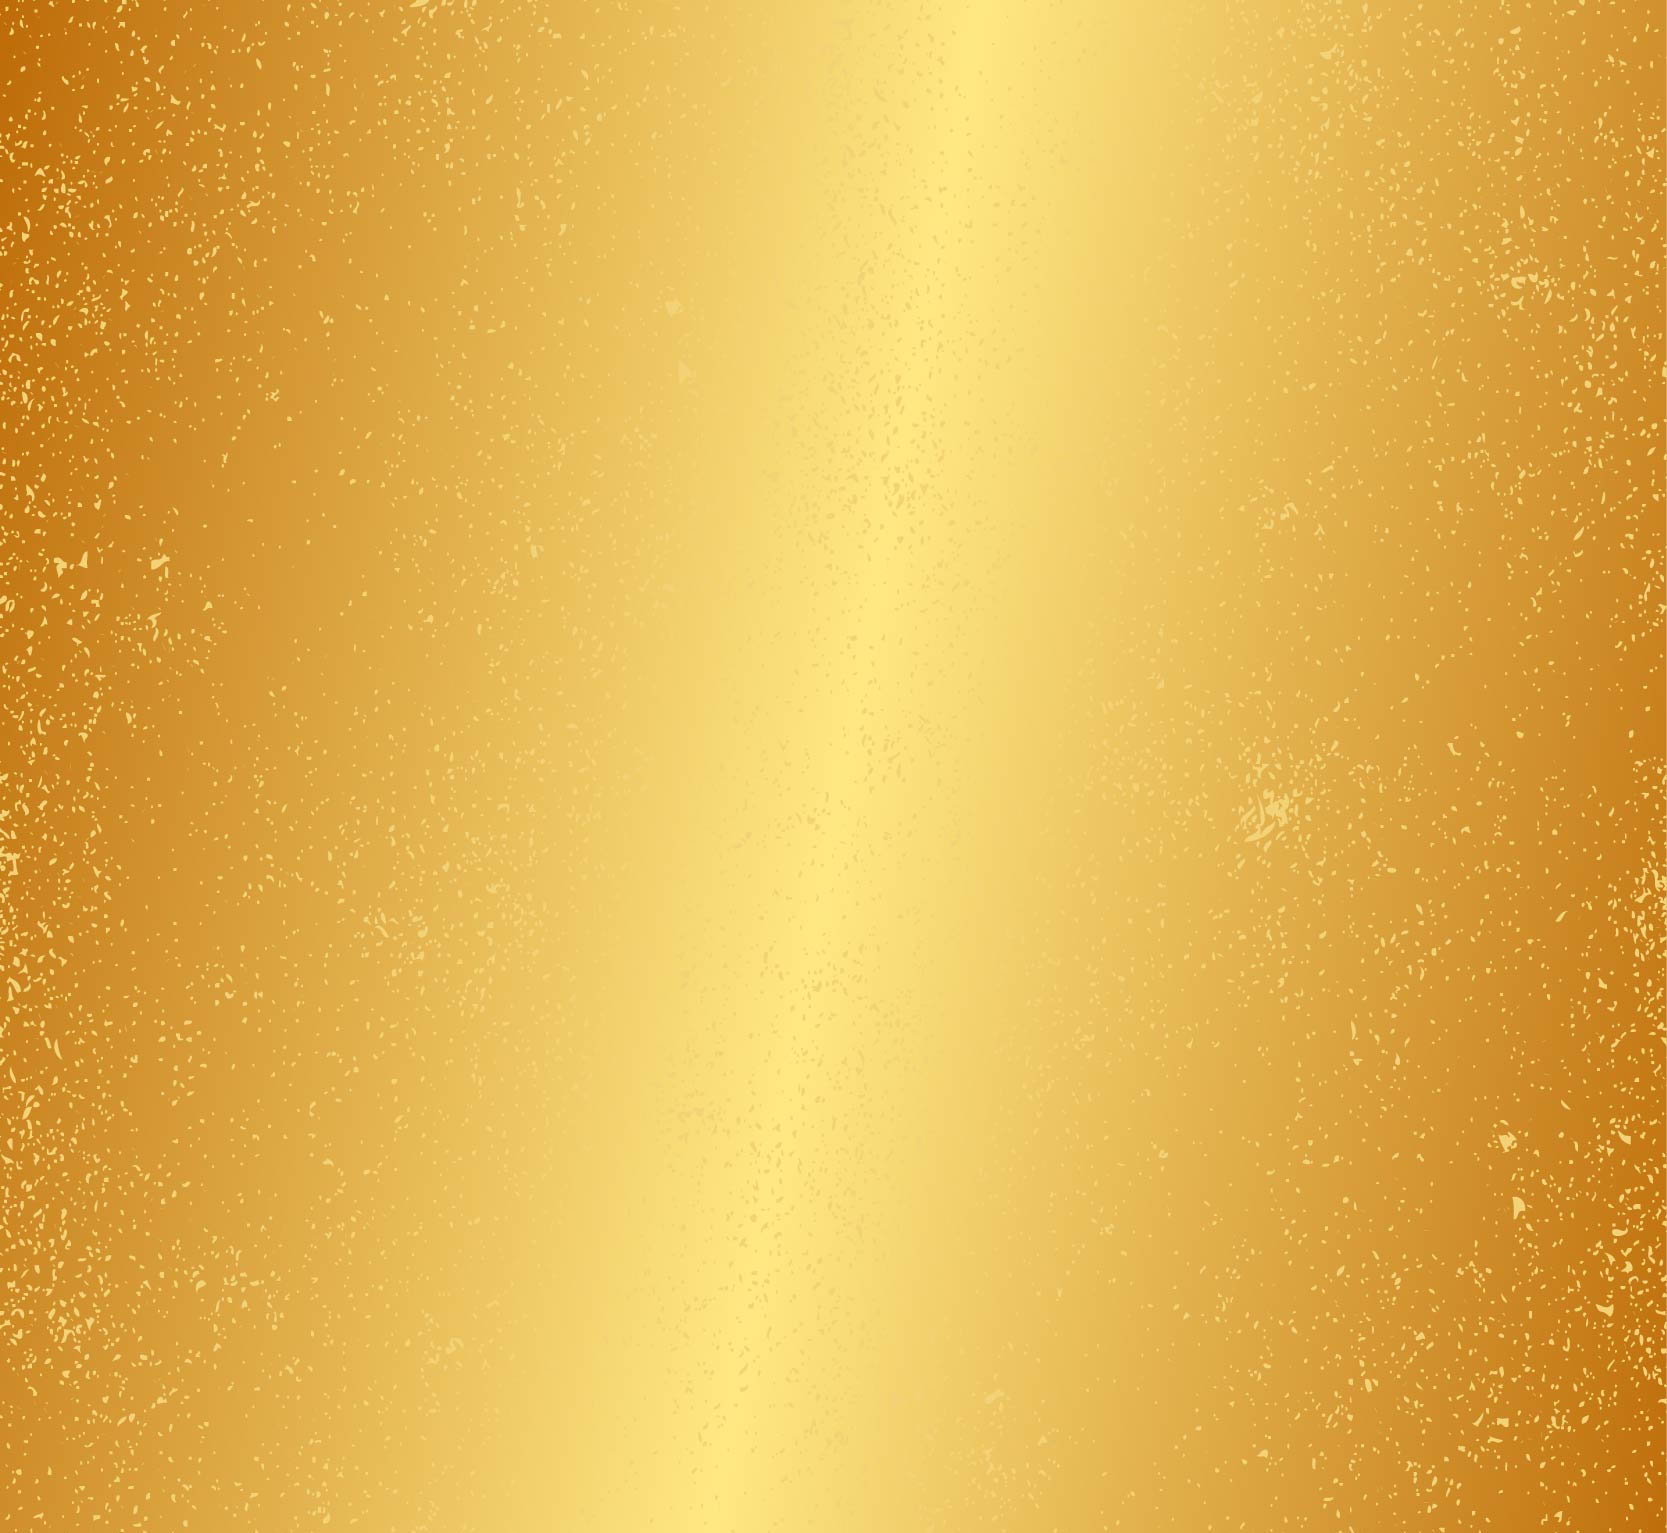 faint pattern gold hd backgrounds vector